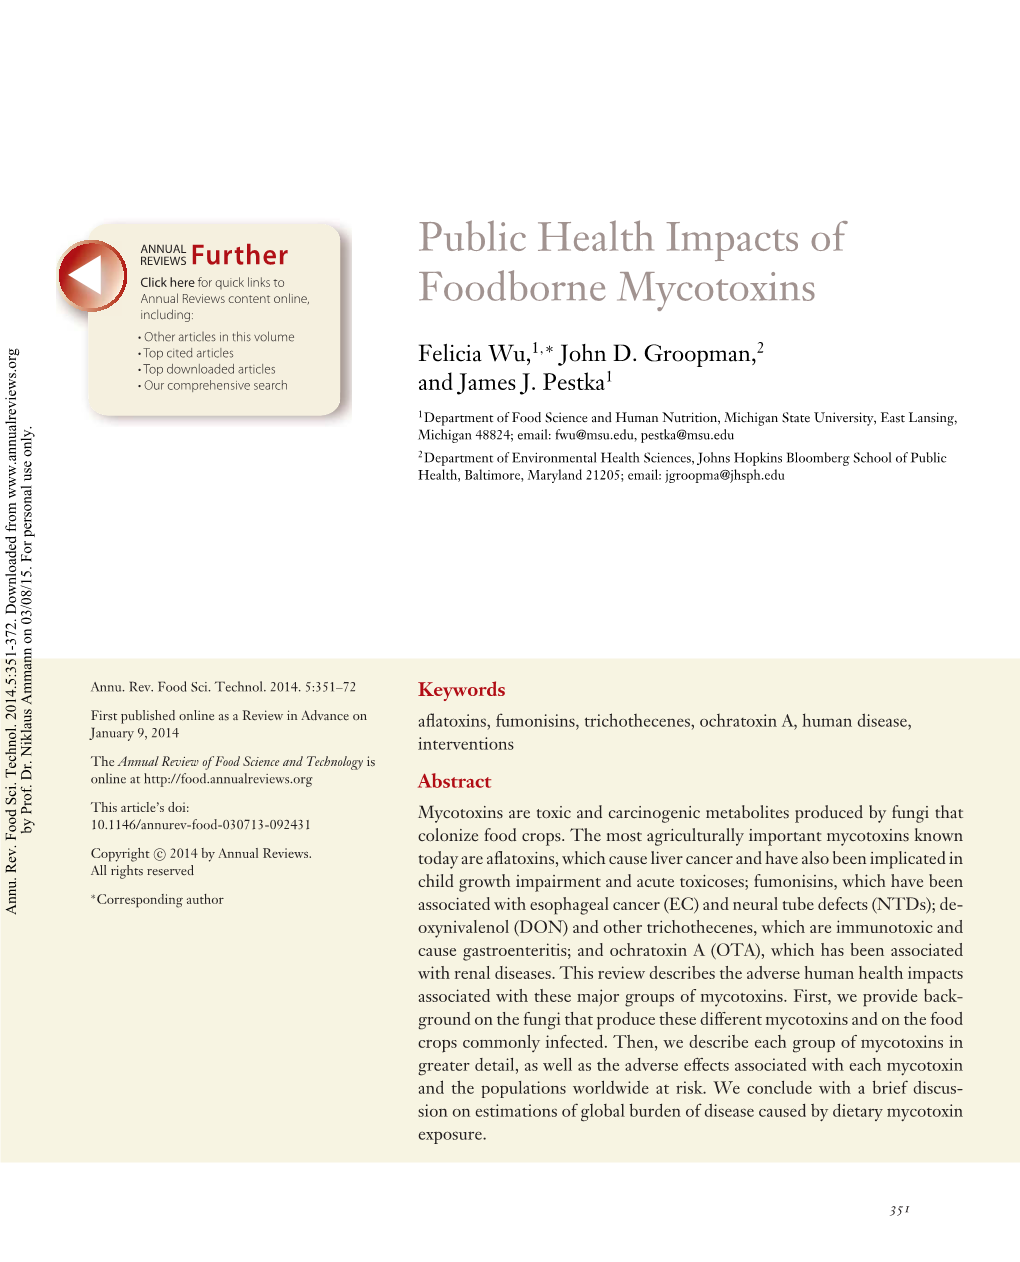 Public Health Impacts of Foodborne Mycotoxins